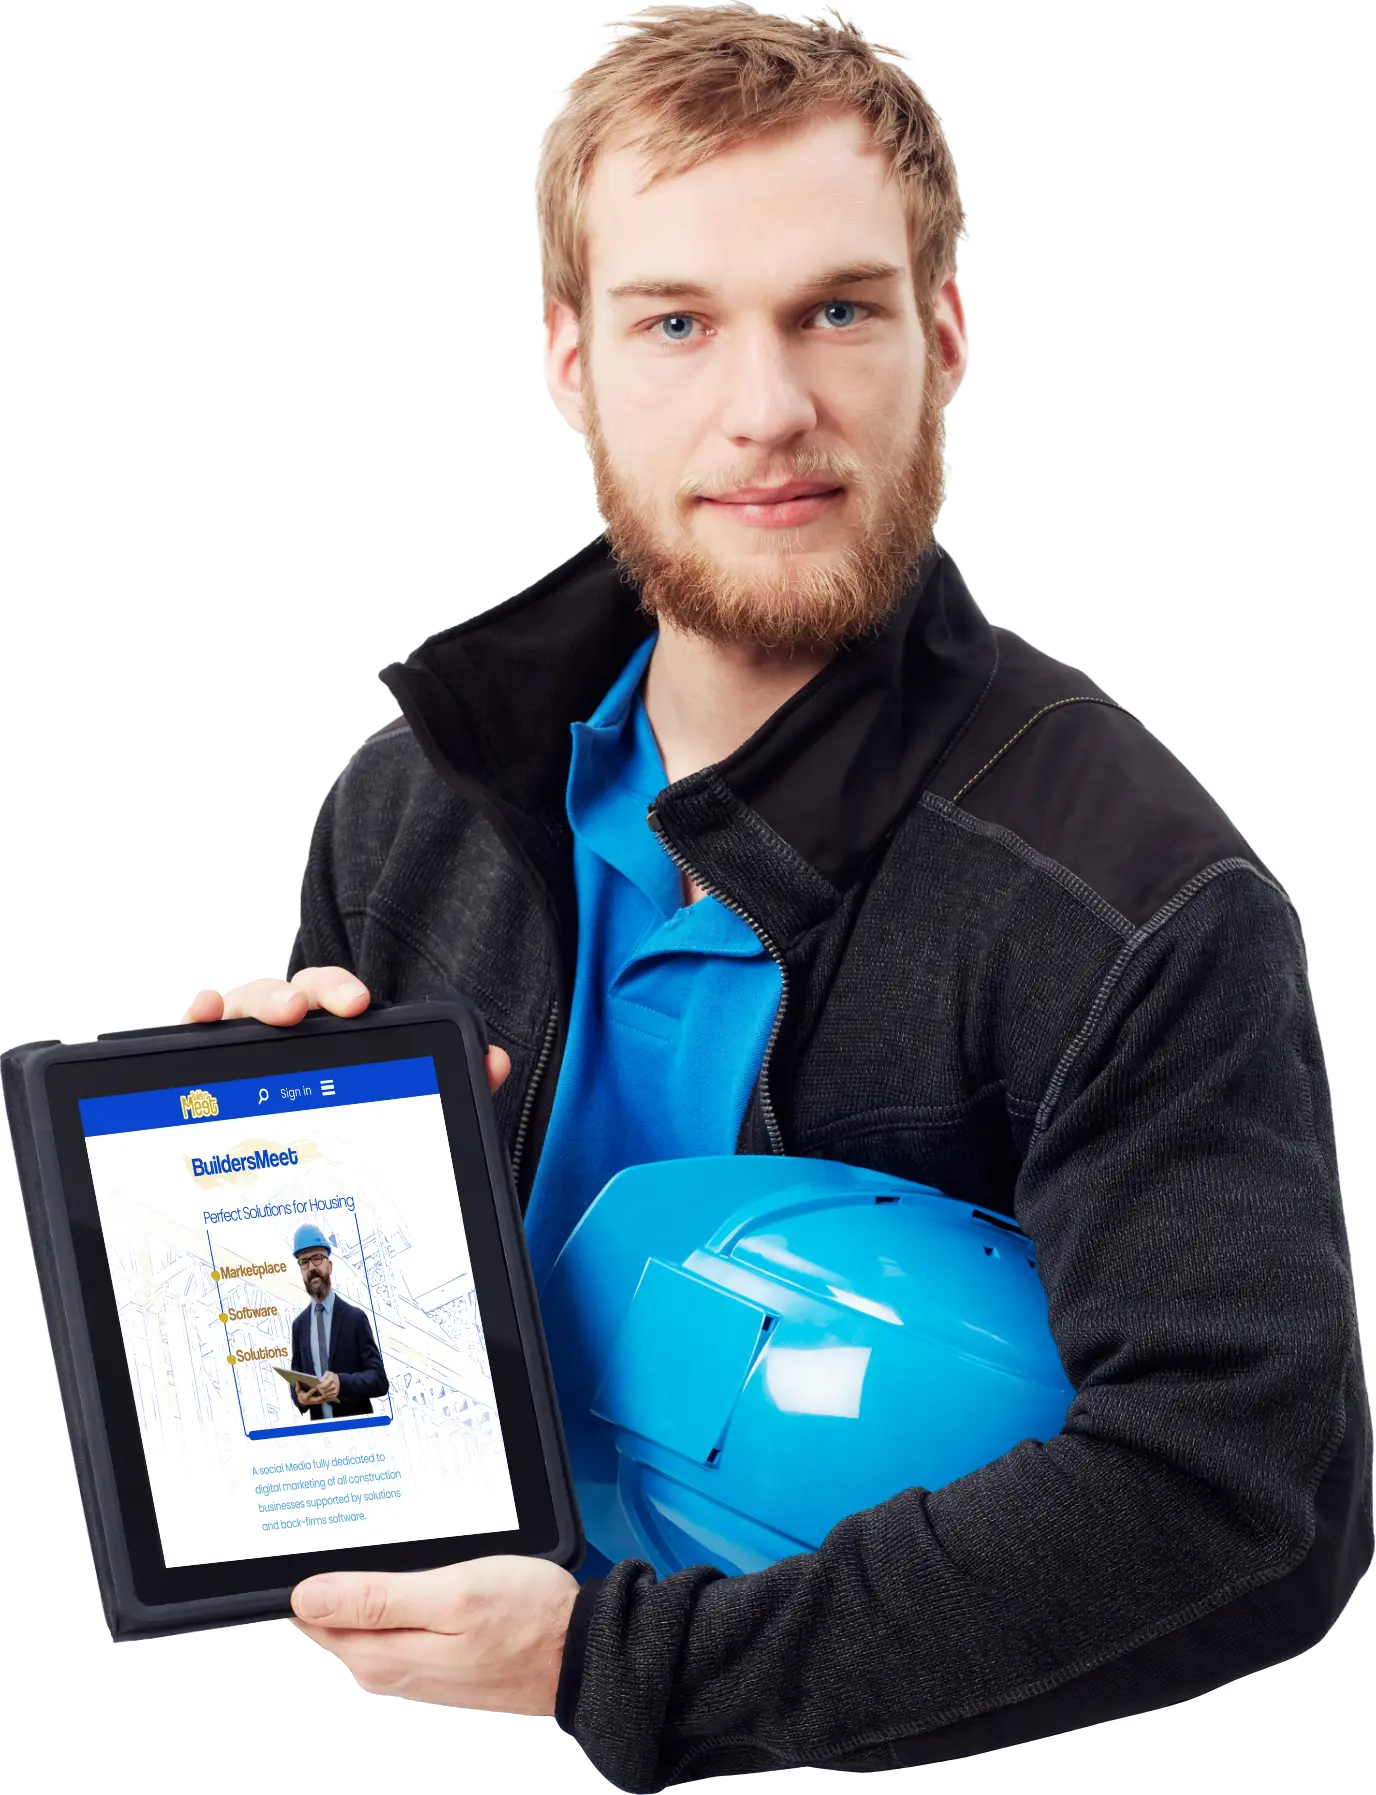 Construction worker with helmet and iPad, displaying BuildersMeet homepage